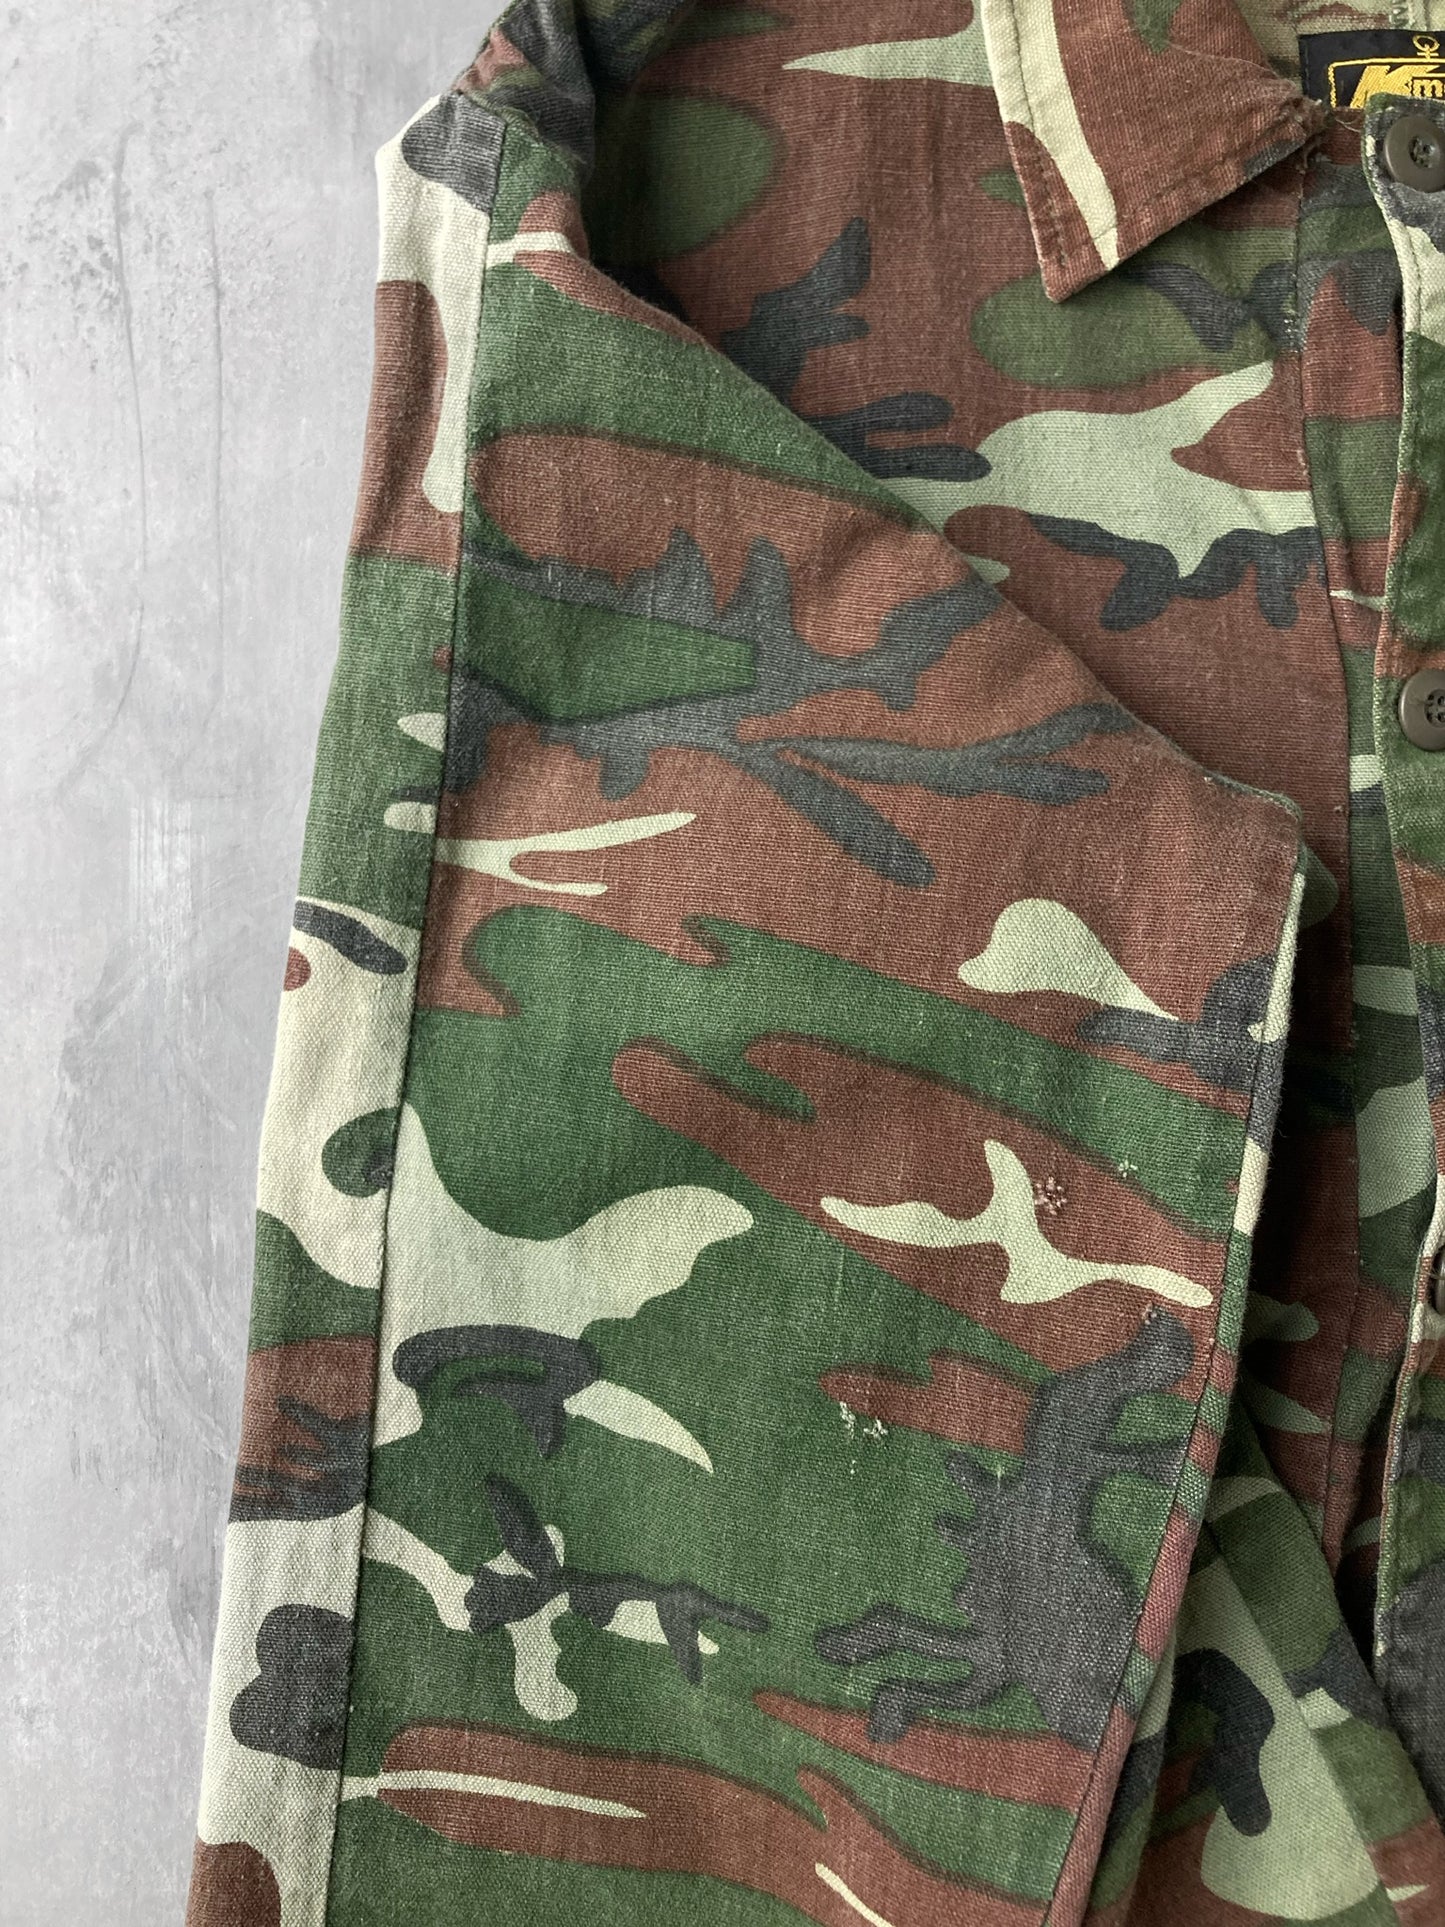 Camouflage Fatigue Shirt Jacket 80's - XL Boxy